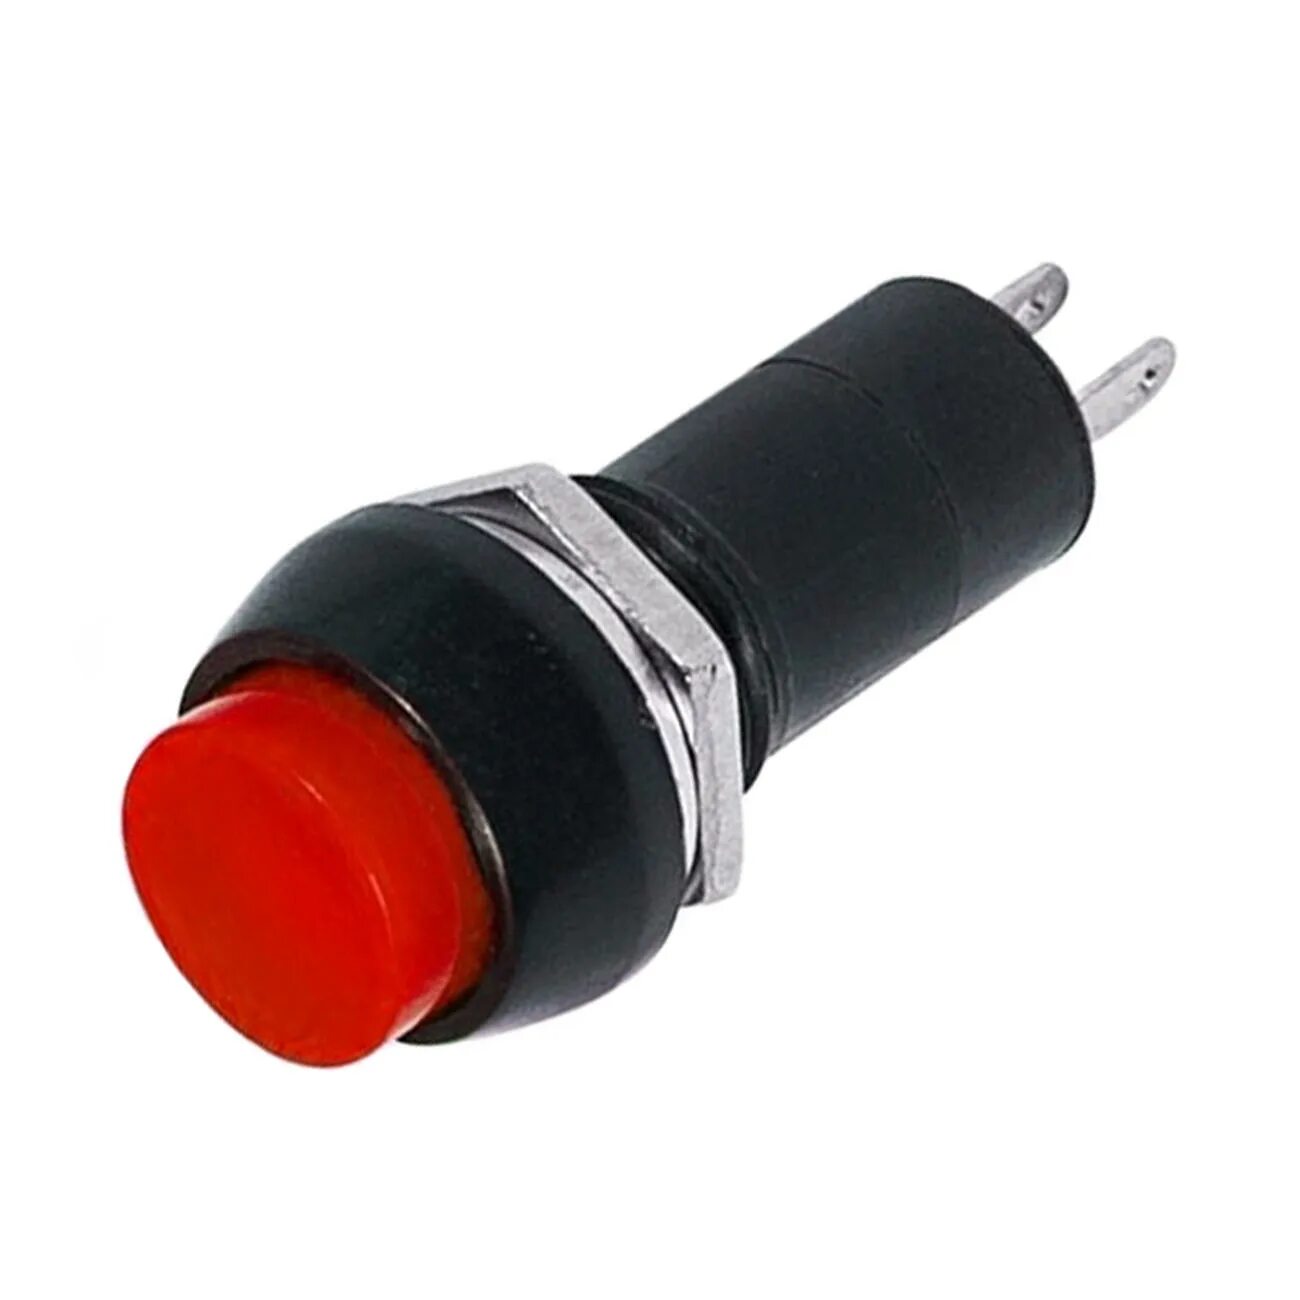 Кнопка 6 мм. Выключатель-кнопка 250v 1а (2с) on-off красная Micro Rexant. Выключатель-кнопка красная 1a 250в Rexant 36-3030. Выключатель-кнопка 250v 1а (2с) on-off красная (PBS-11а) Rexant 36-3030. Выключатель кнопка 250v Rexant.